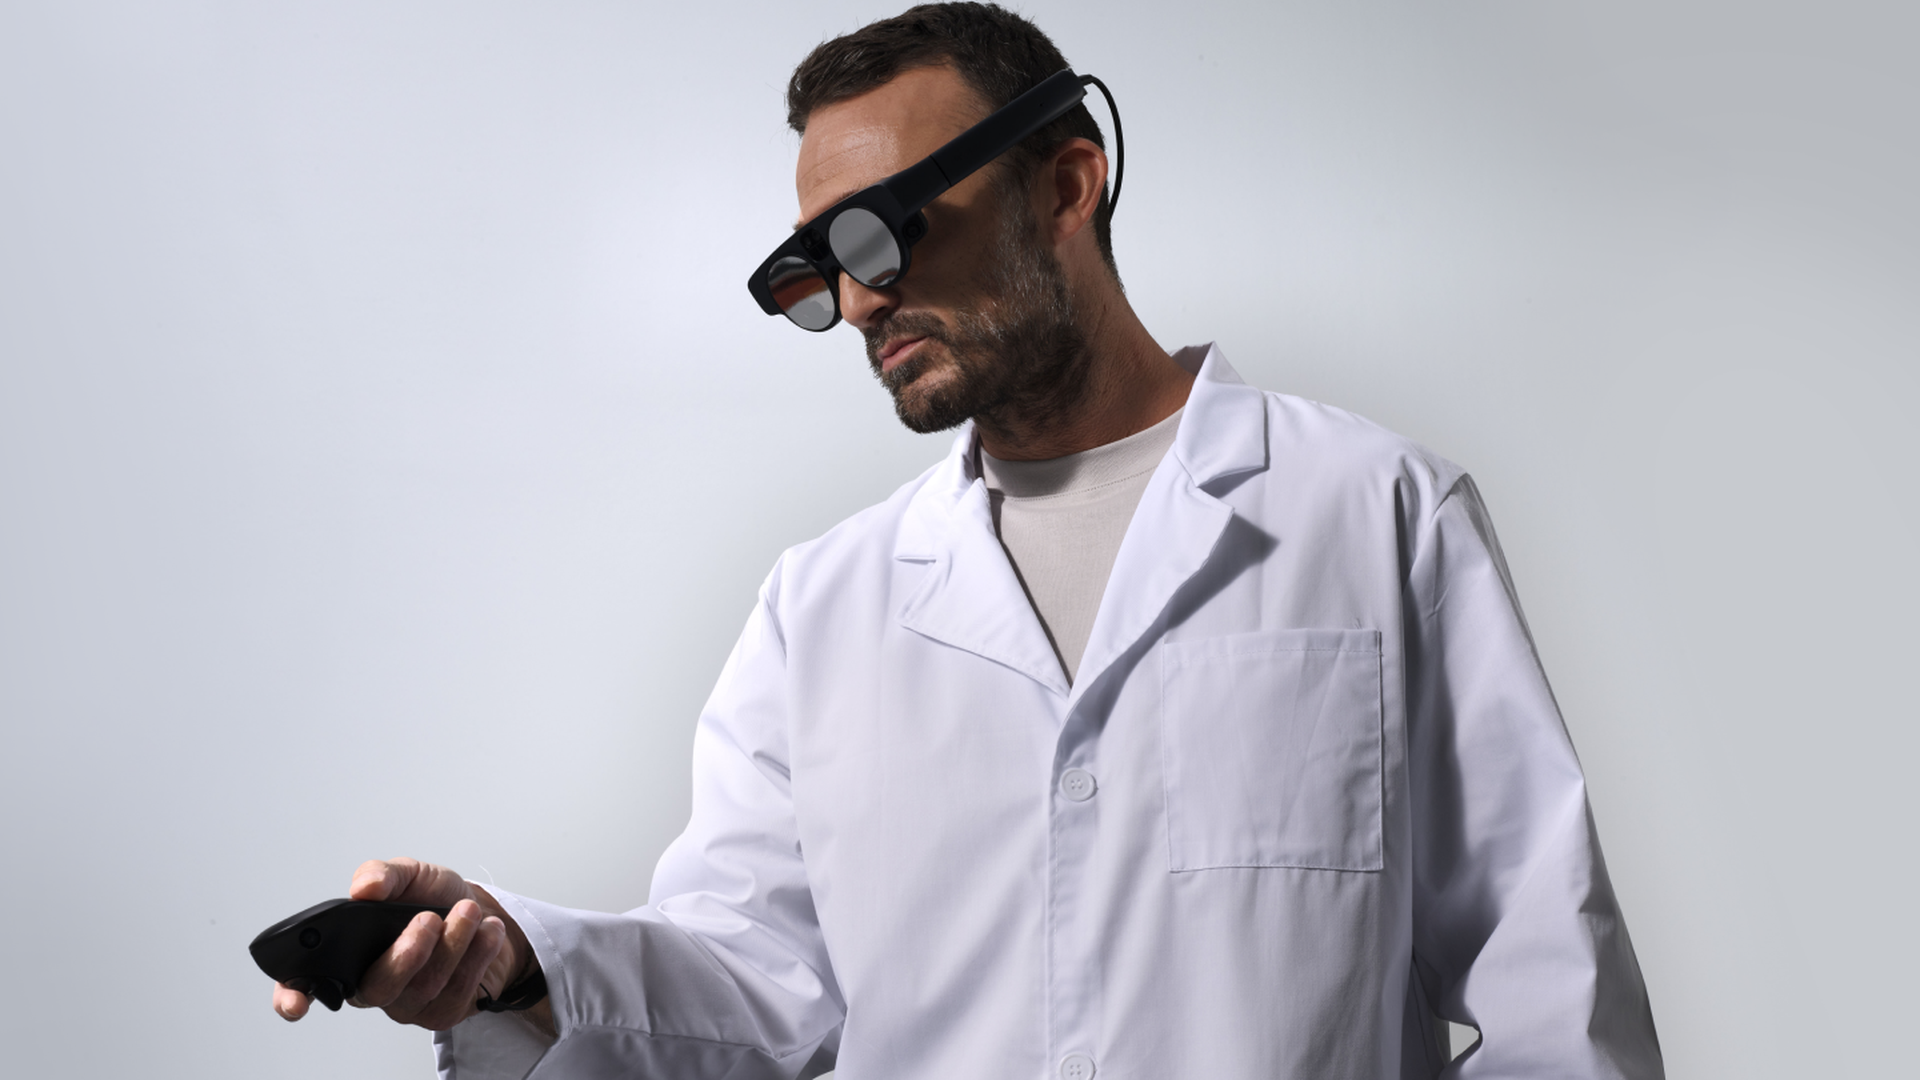 A man in a medical shirt wearing a Magic Leap 2 headset